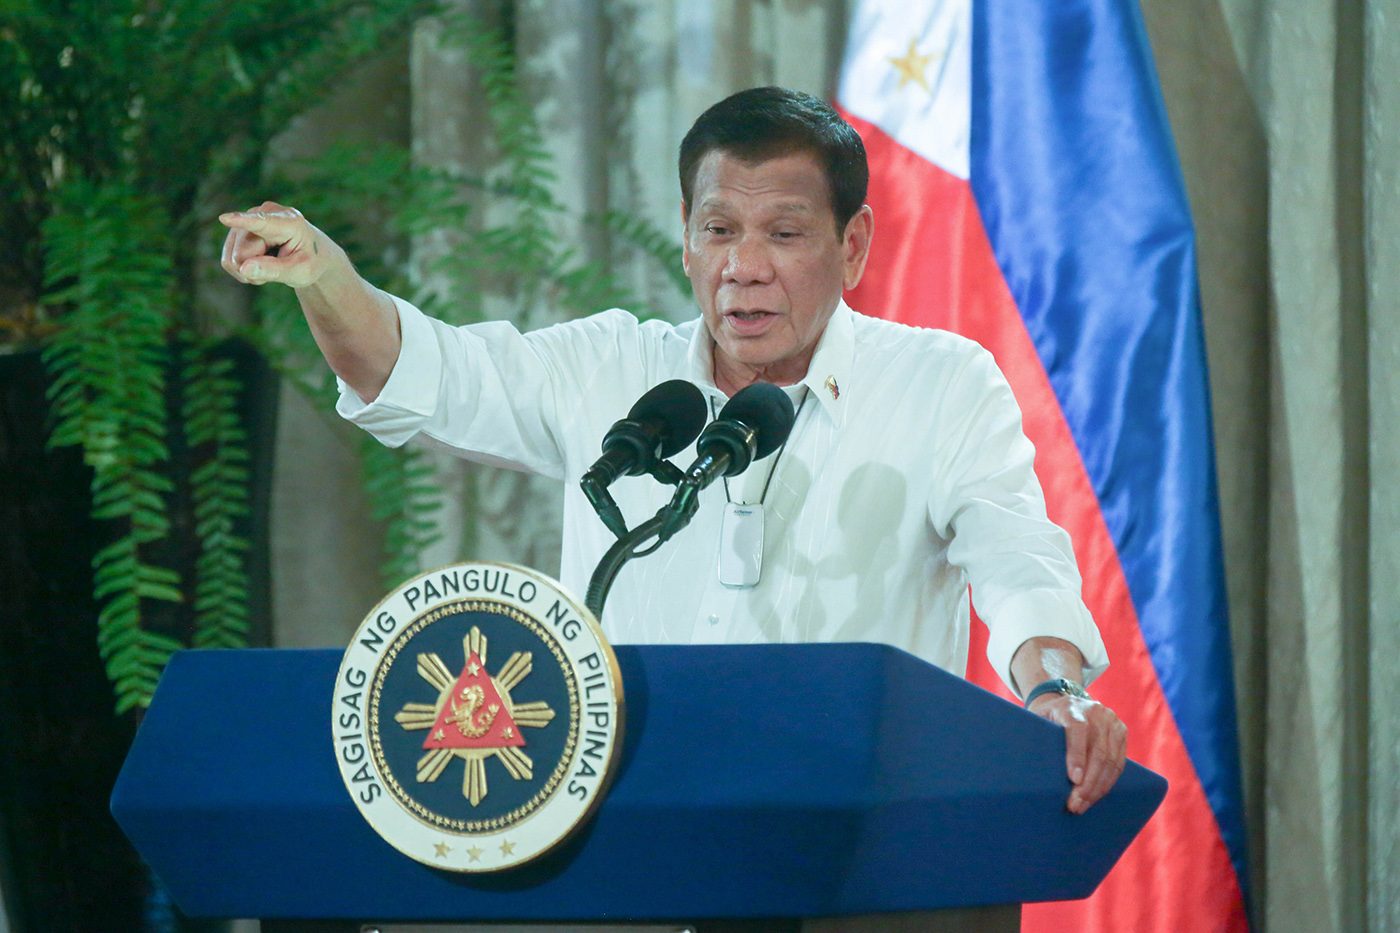 ‘Shoot them dead’: Duterte orders troops to kill quarantine violators